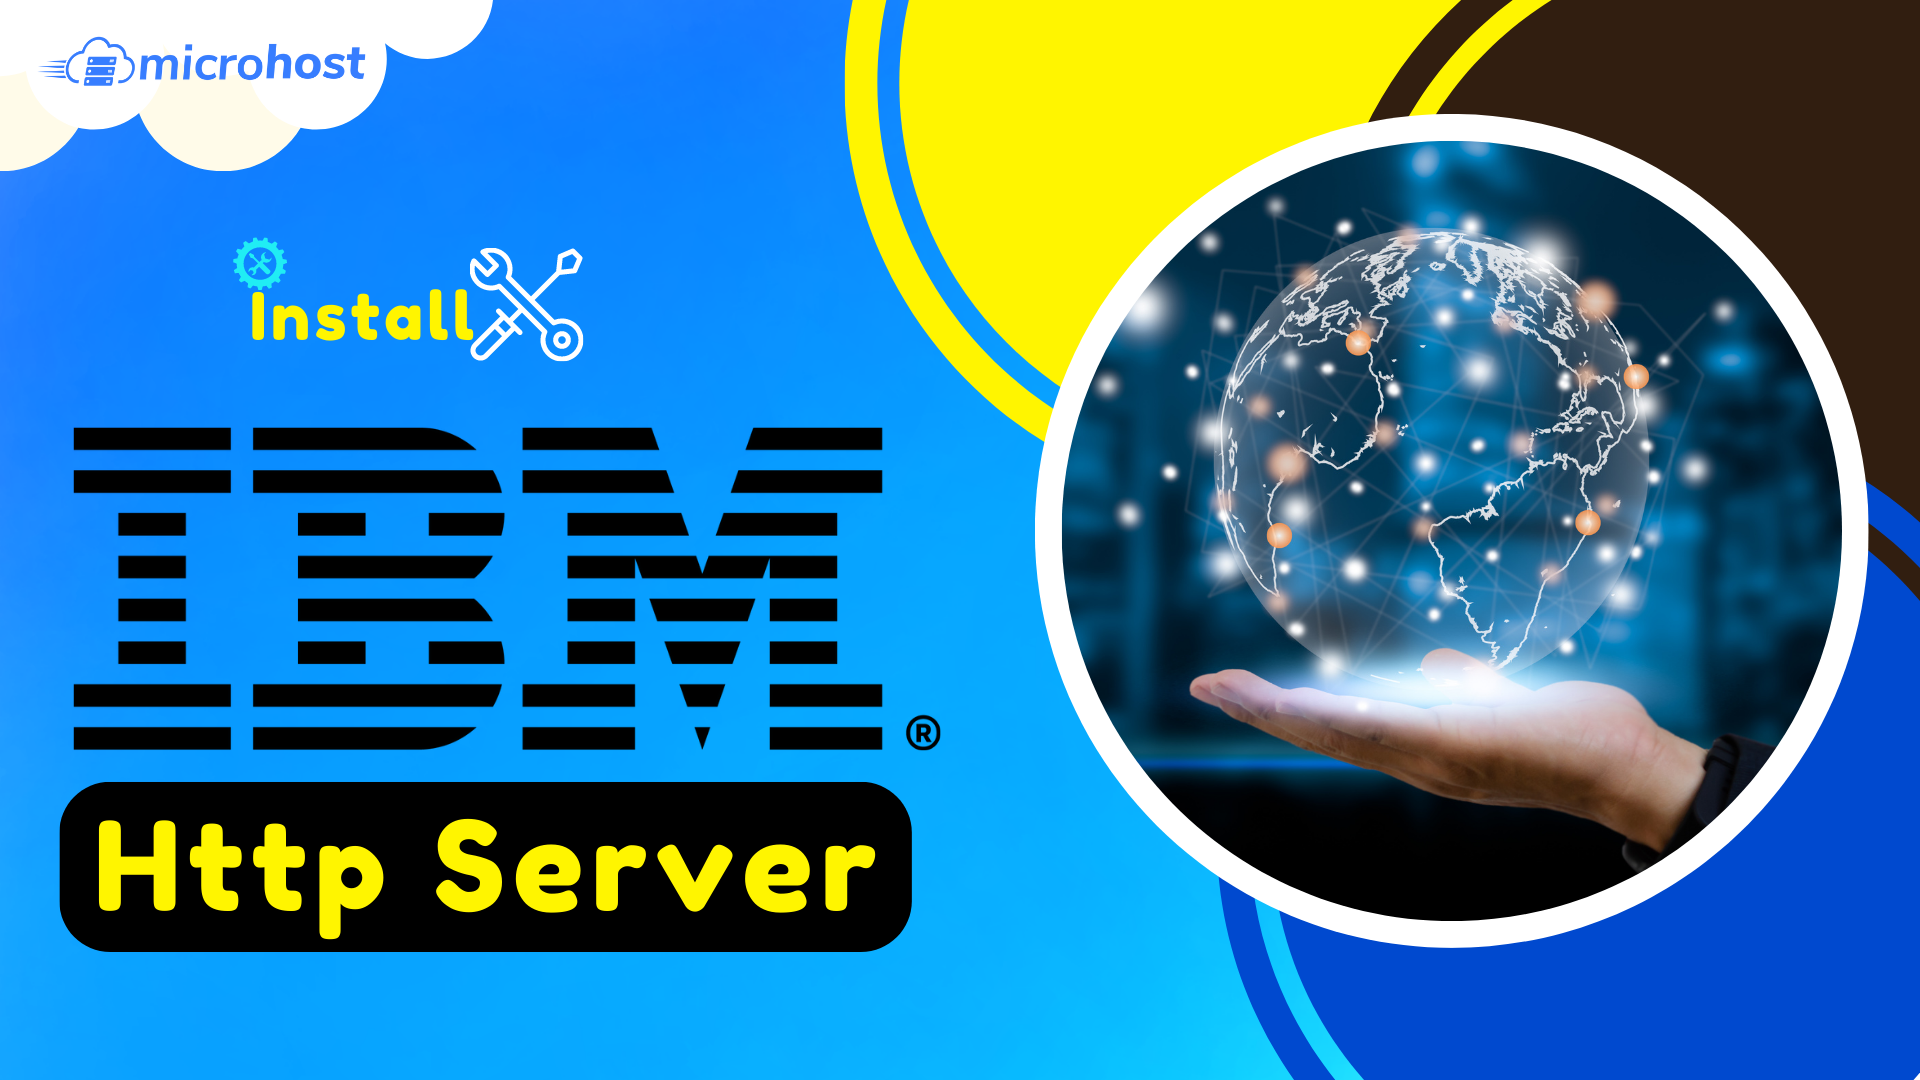 How to install IBM Http server